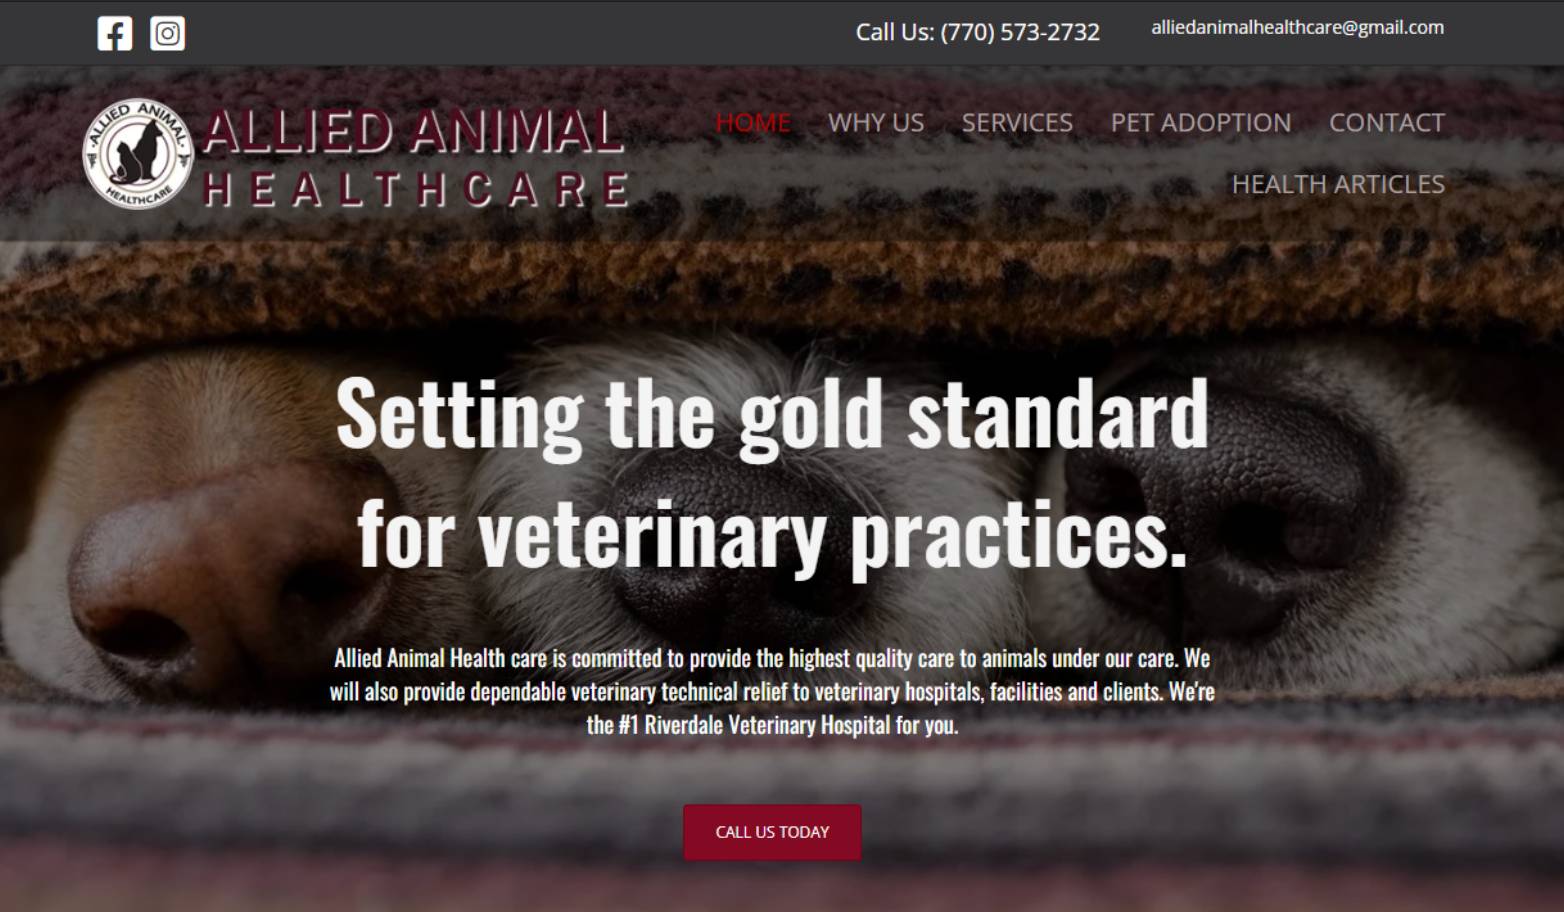 Allied Animal Healthcare - A Riverdale Veterinary Hospital